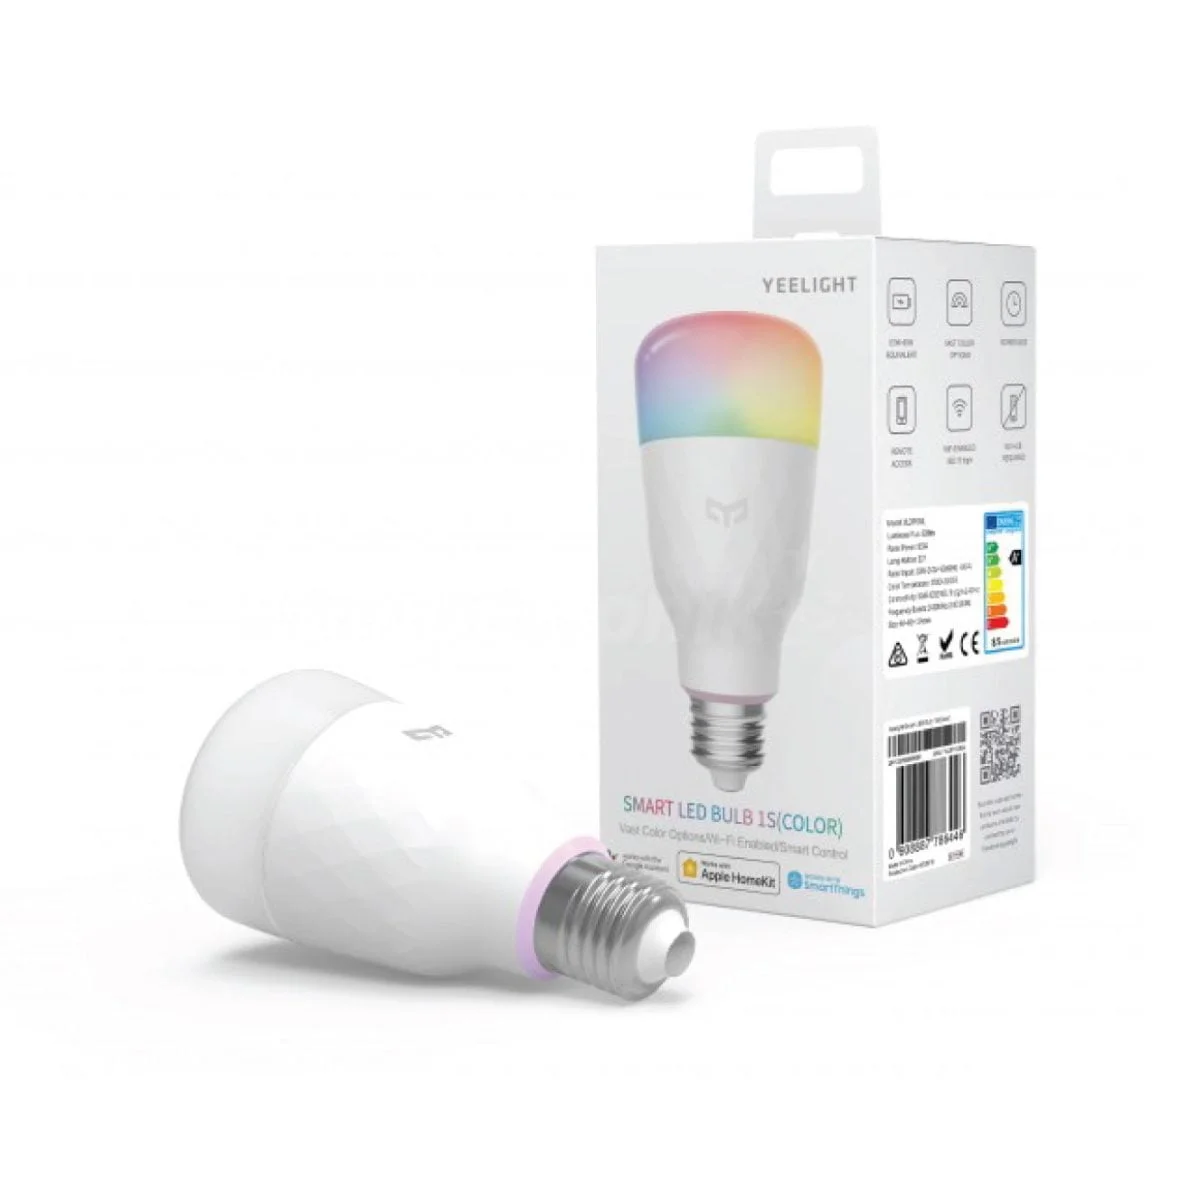 Bulb 24 1 شاومي سوف تسمح لك لمبة الإضاءة الذكية Yeelight 1S Rgb بإنشاء منزلك الذكي الخاص. يمكنك التحكم فيه بصوتك أو تطبيقك وتحديد درجة الحرارة والقوة التي يجب أن يلمع بها. التدفق الضوئي: 800 لومن درجة حرارة اللون: 1700 K-6500K حامل المصباح: E27 الطاقة المقدرة: 8.5 واط &Amp;Nbsp; 16 مليون لون مع تمكين Wifi والتحكم الصوتي والتحكم في التطبيقات ومزامنة الموسيقى &Amp;Lt;Img Class=&Amp;Quot;Alignnone Wp-Image-8061 Size-Full&Amp;Quot; Src=&Amp;Quot;Https://Lablaab.com/Wp-Content/Uploads/2020/04/Bulb-27-2-Scaled.jpg&Amp;Quot; Alt=&Amp;Quot;&Amp;Quot; Width=&Amp;Quot;2560&Amp;Quot; Height=&Amp;Quot;357&Amp;Quot;&Amp;Gt; &Amp;Nbsp; ييلايت سمارت لمبة لمبة يلايت الذكية 1S (ألوان)